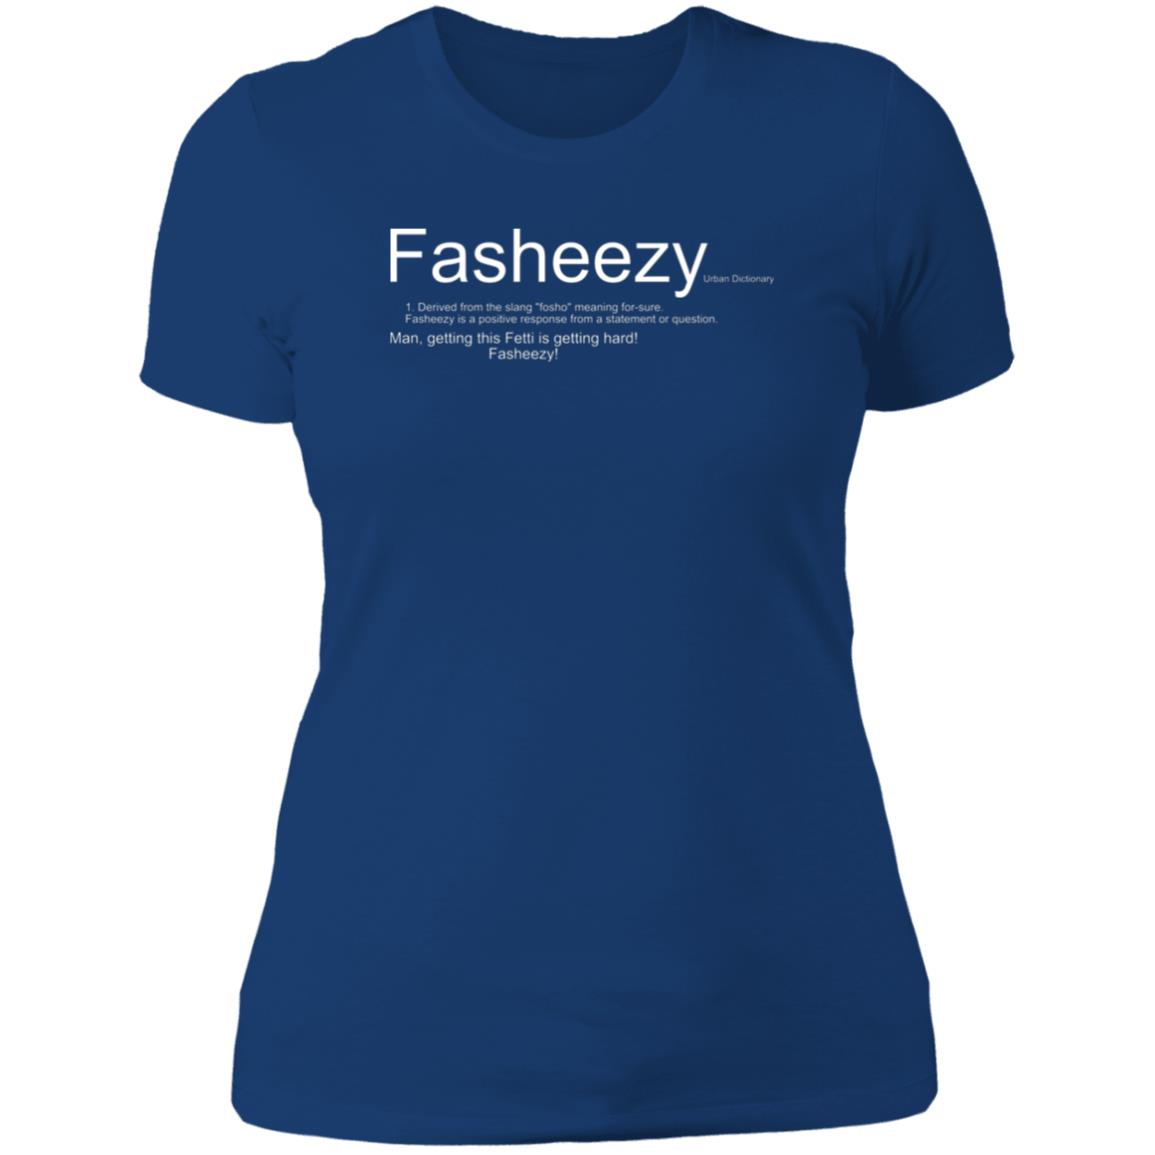 Fasheezy - women's